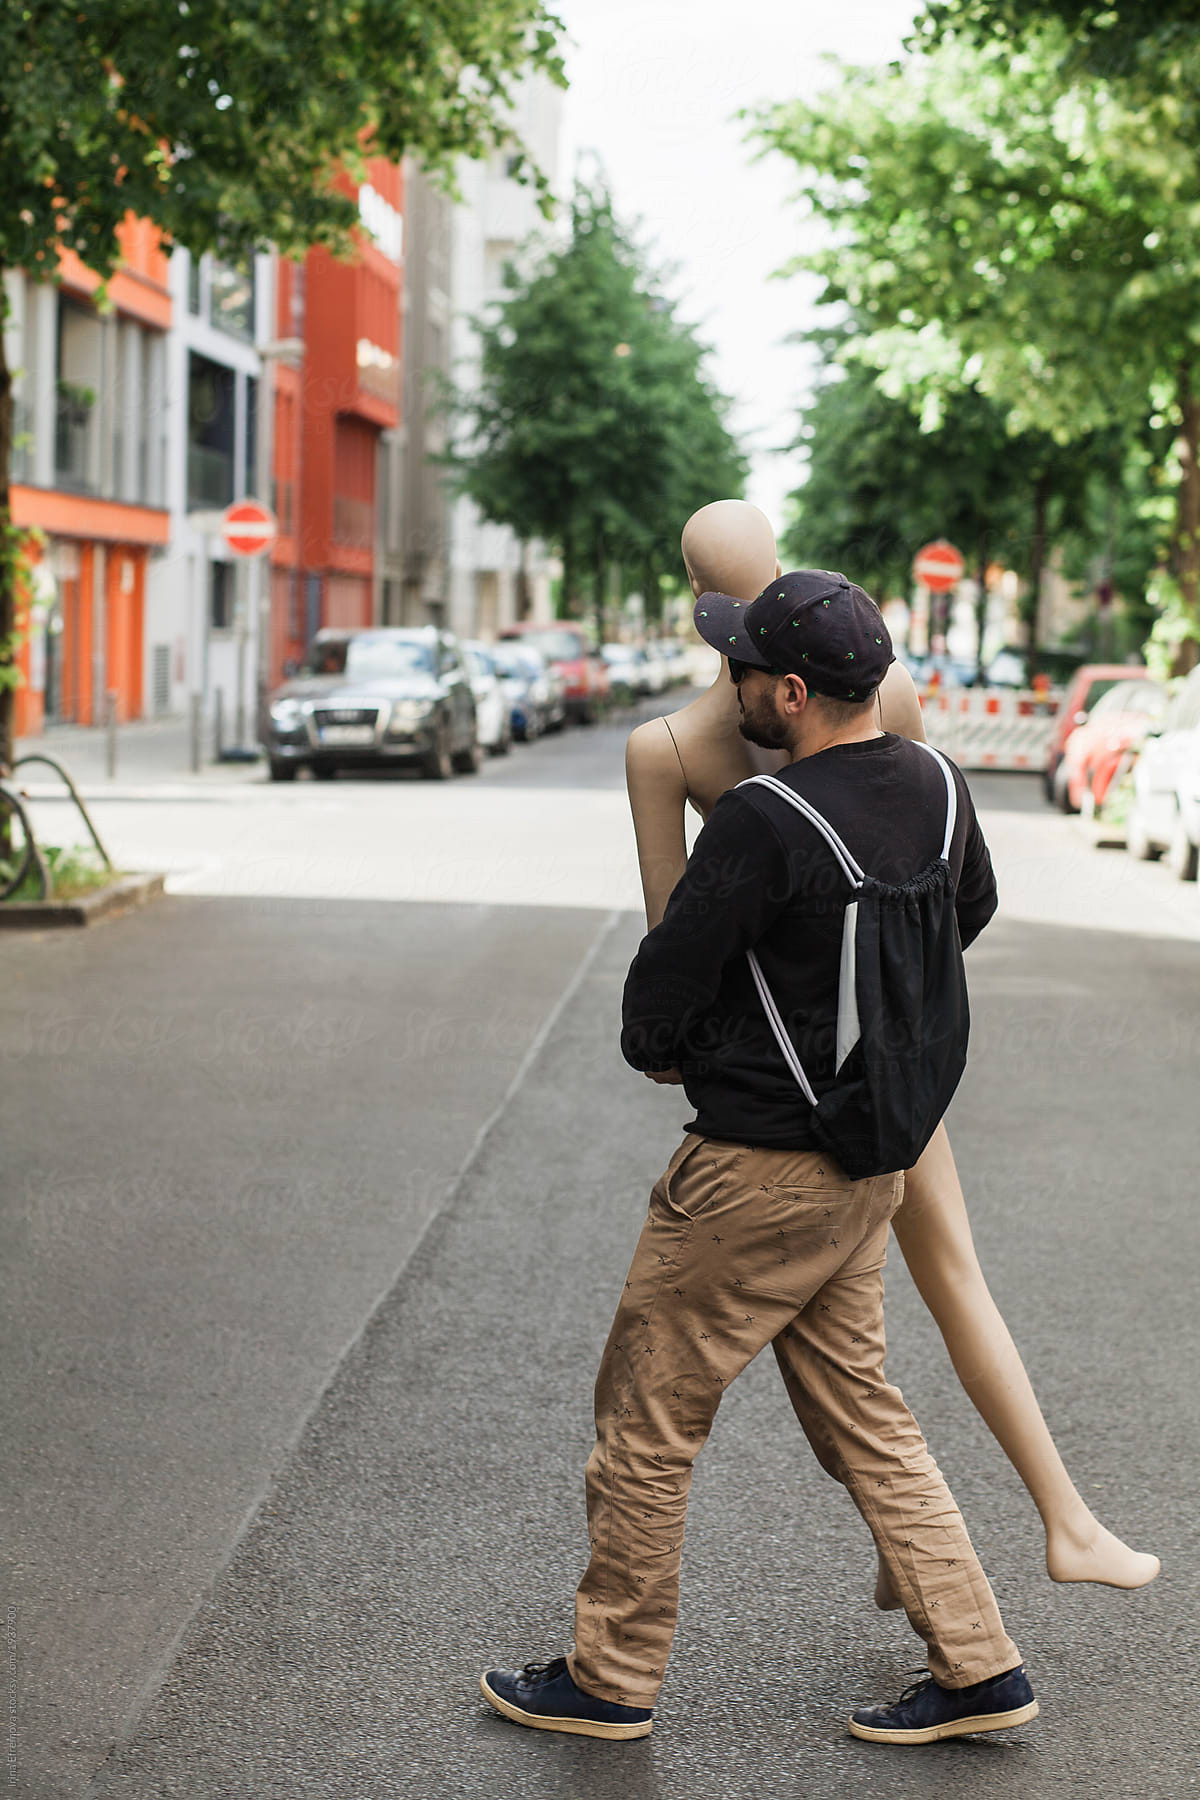 Man on a street carrying an artificial woman